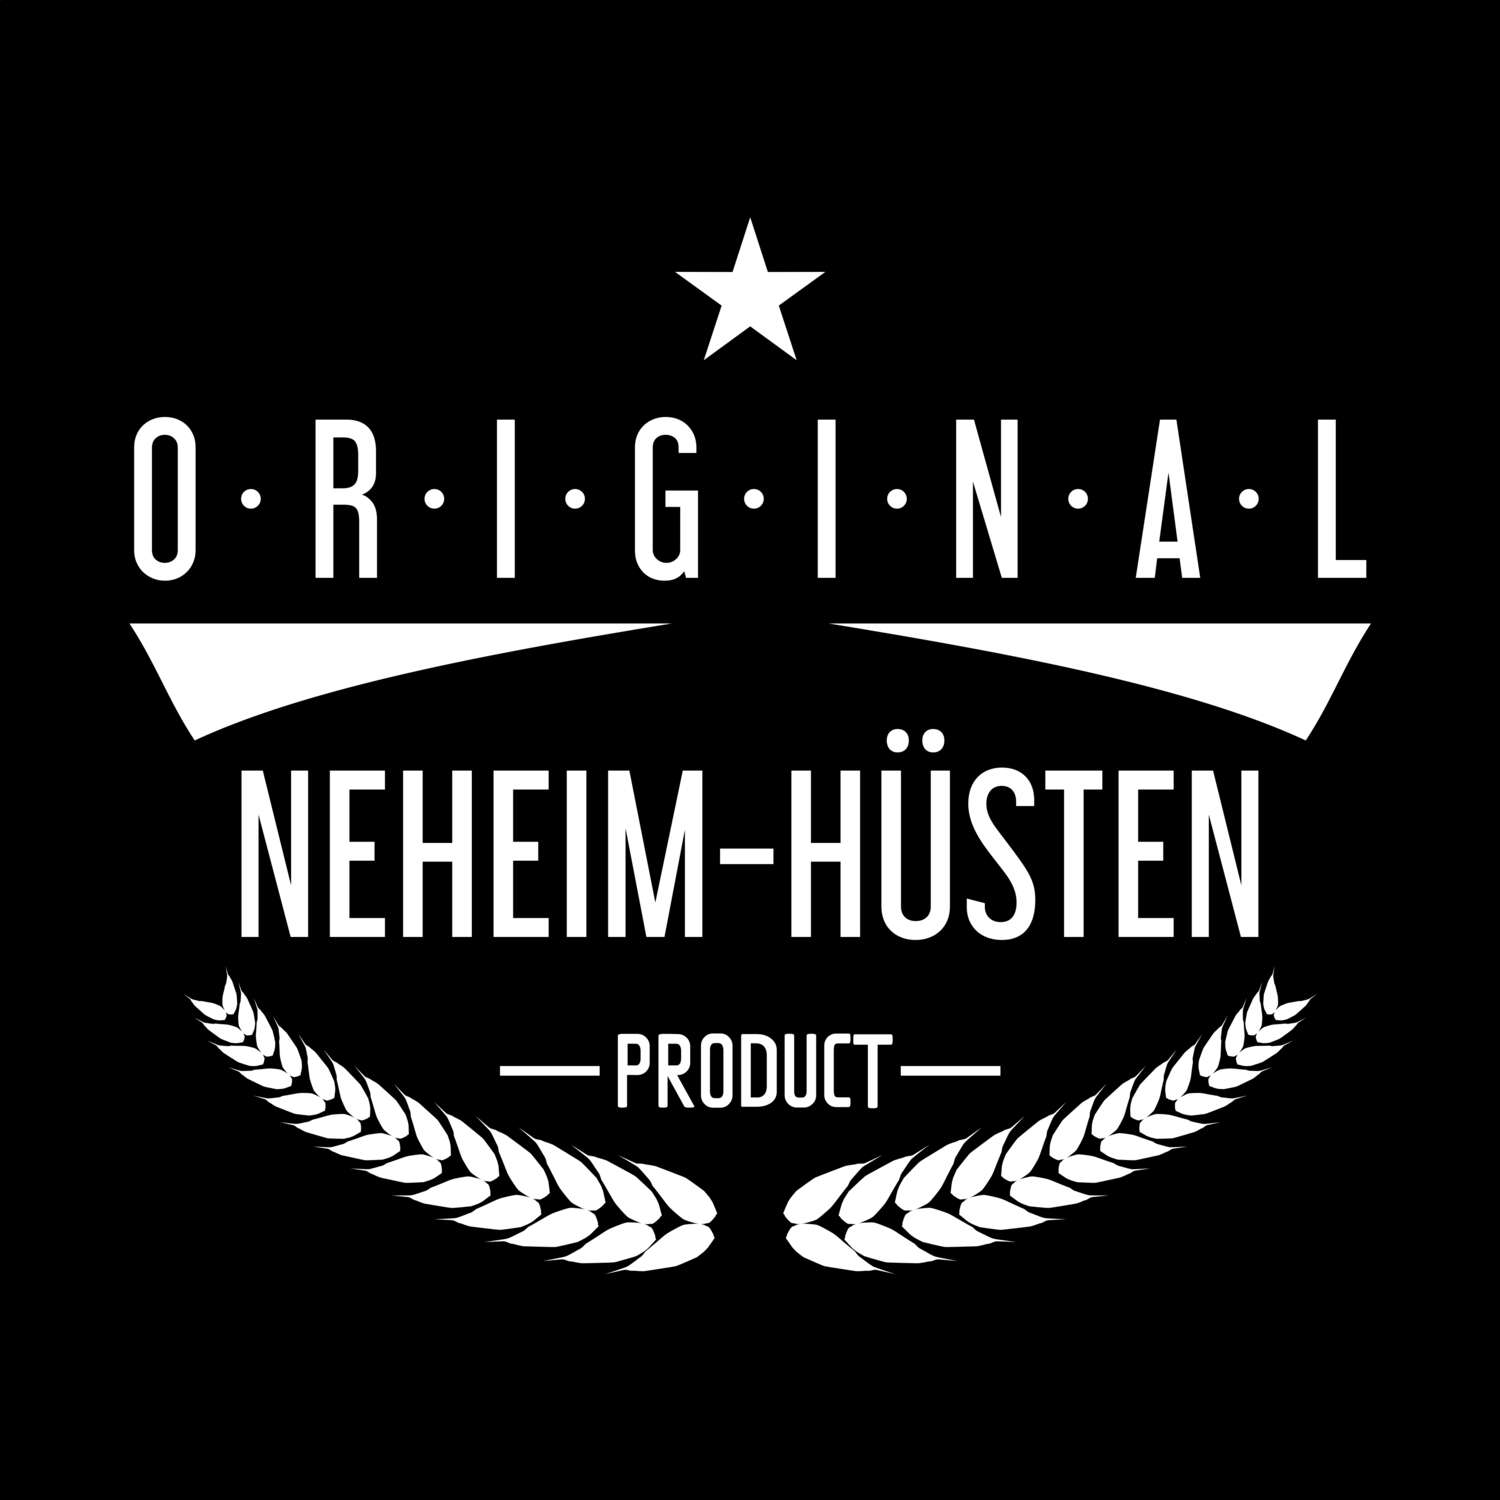 Neheim-Hüsten T-Shirt »Original Product«